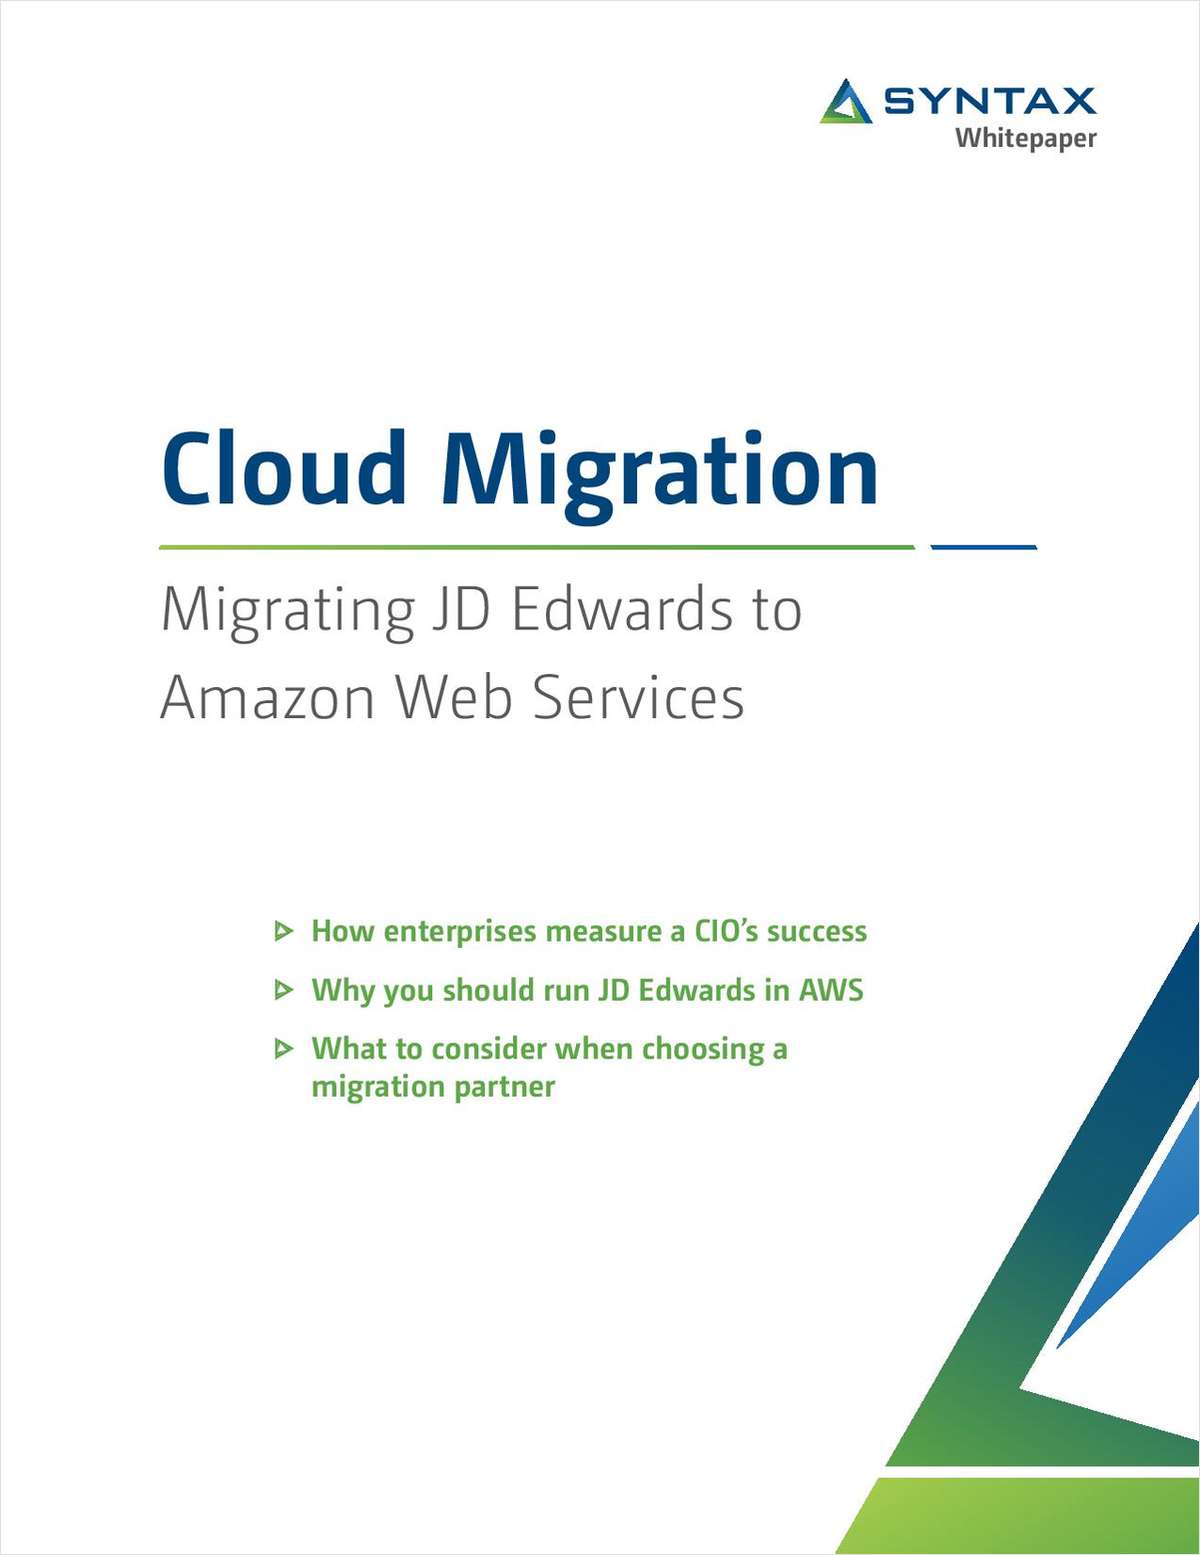 Cloud Migration: Migrating JD Edwards to Amazon Web Services